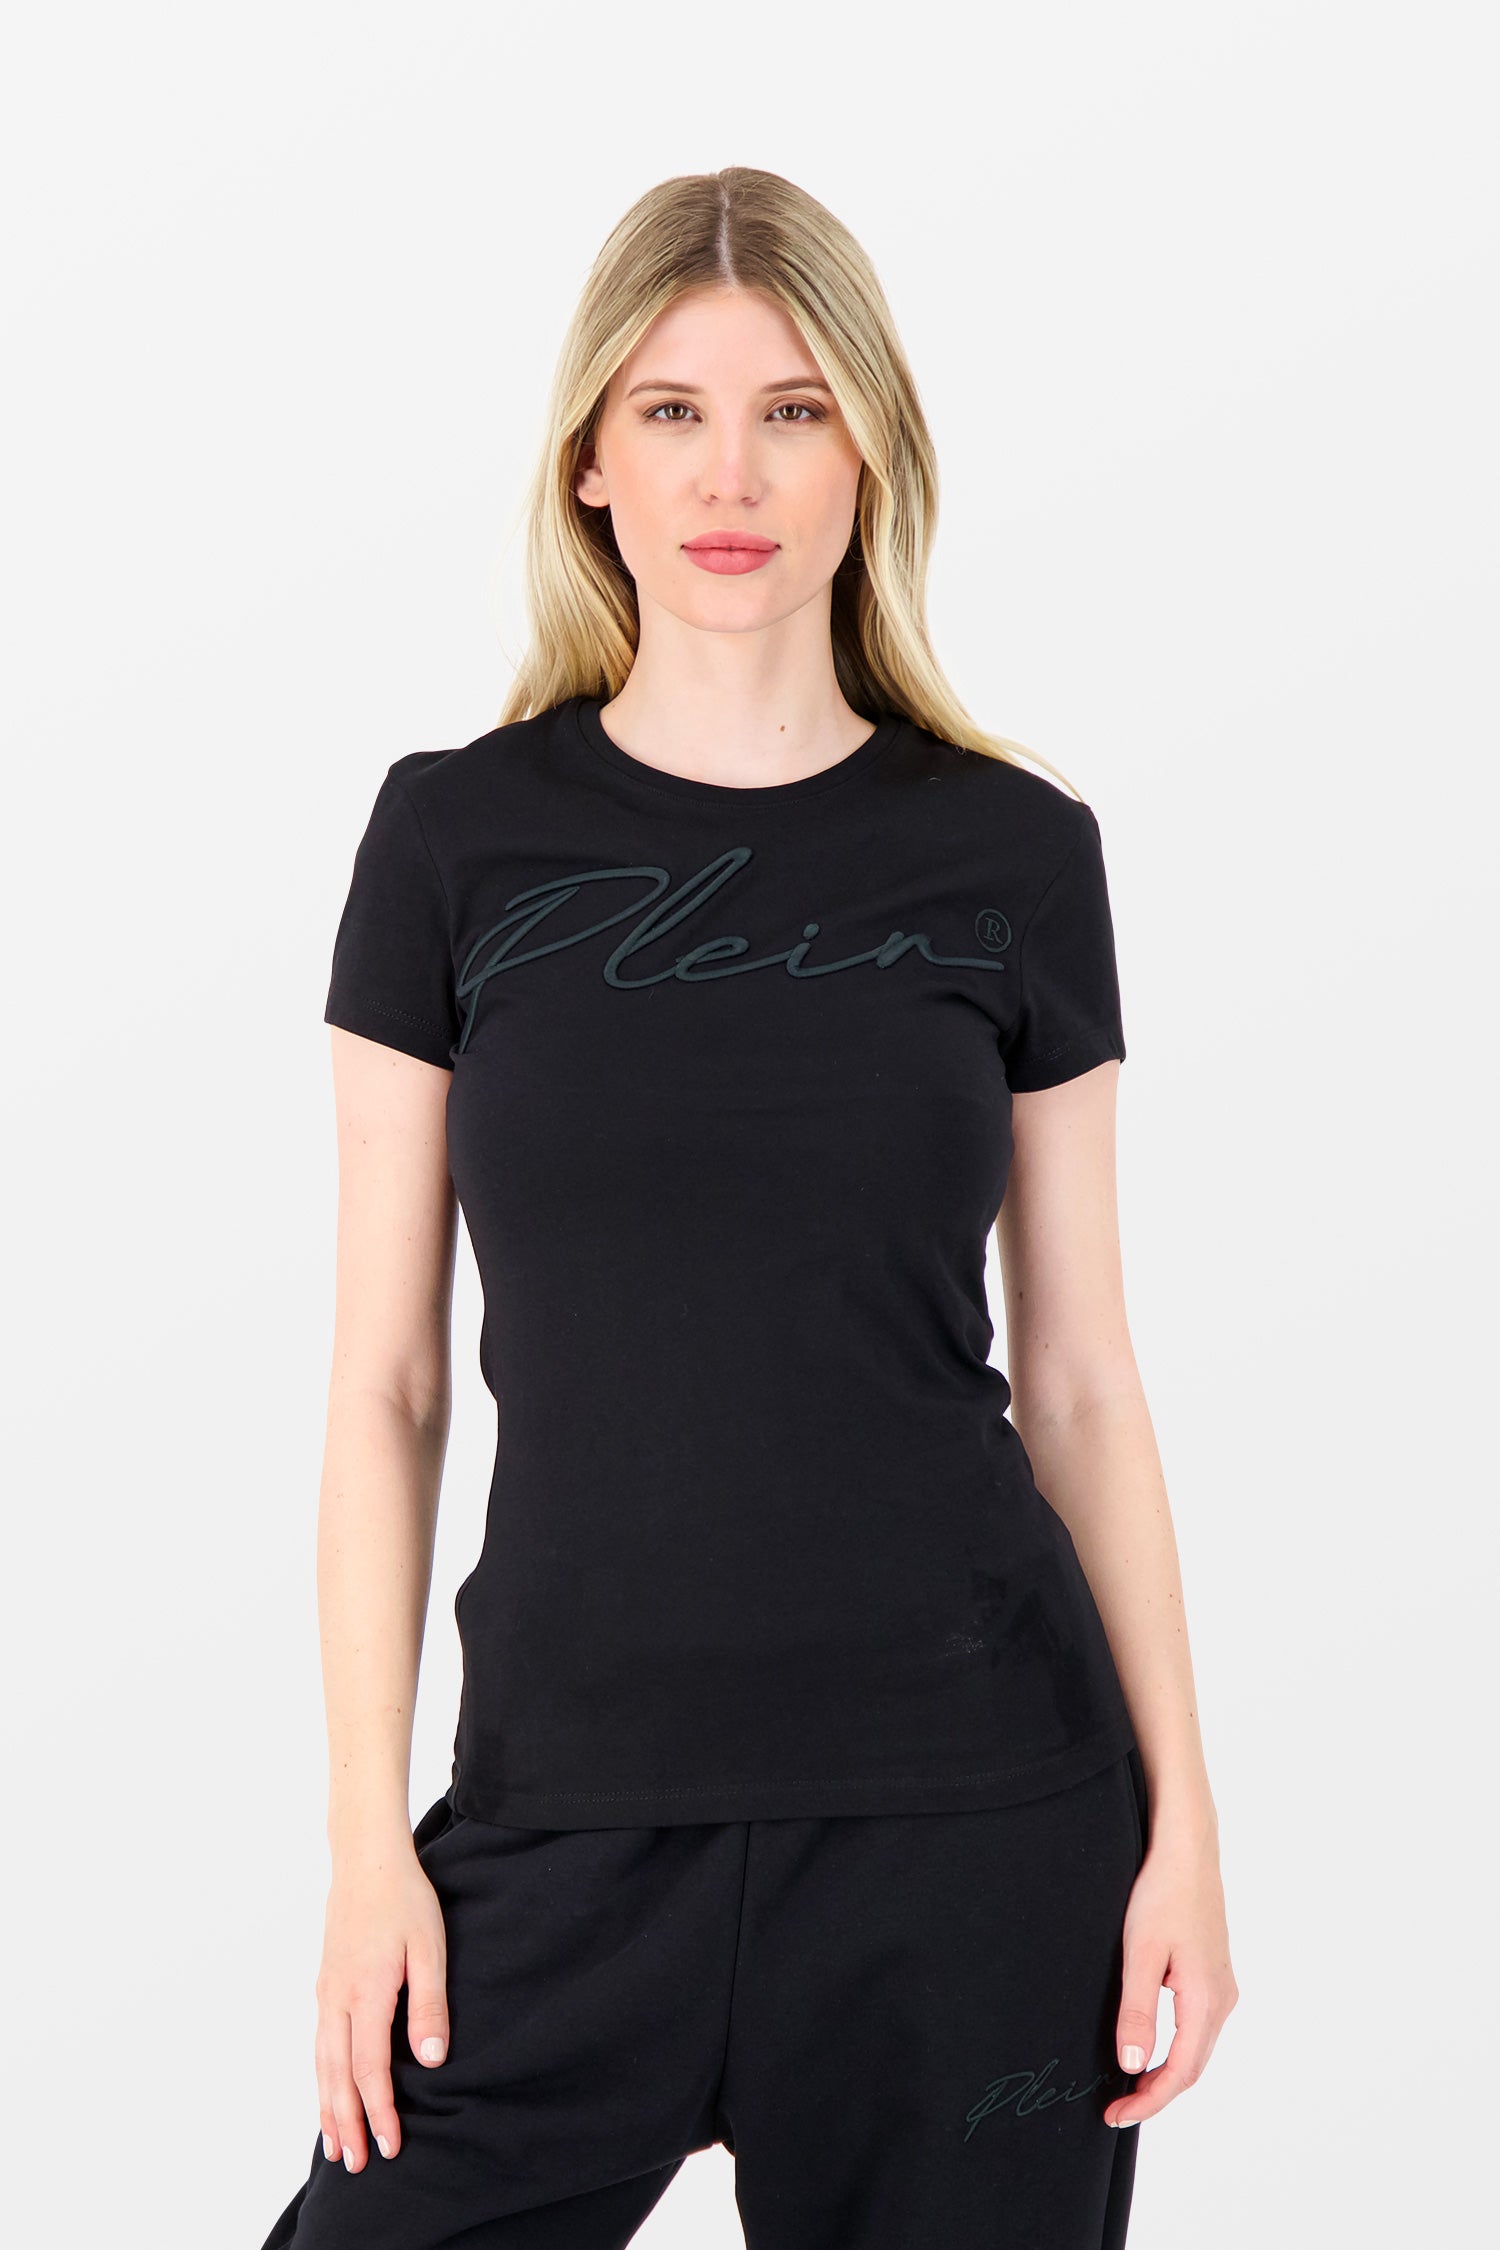 Philipp Plein Black Satin Embroidery Signature T-Shirt